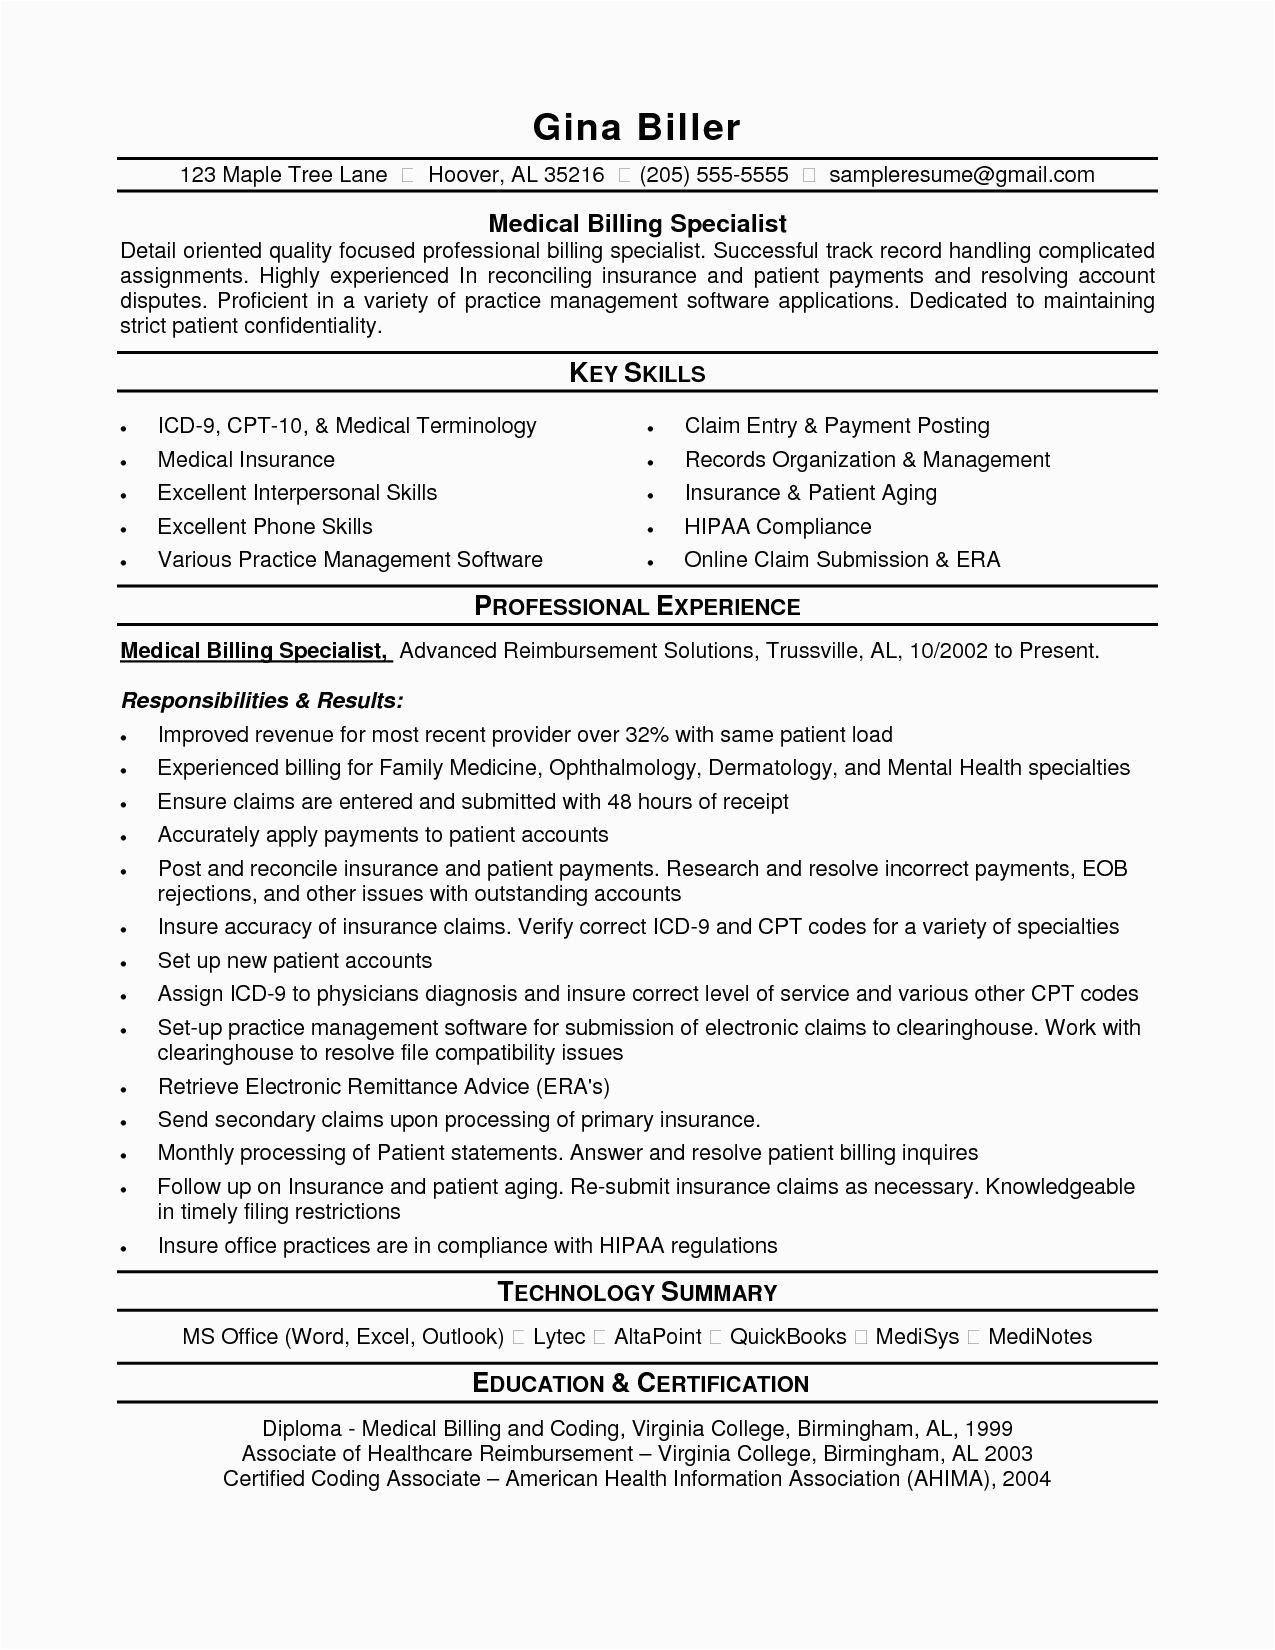 Sample Resume for Medical Billing and Coding Student Medical Billing Resume Sample